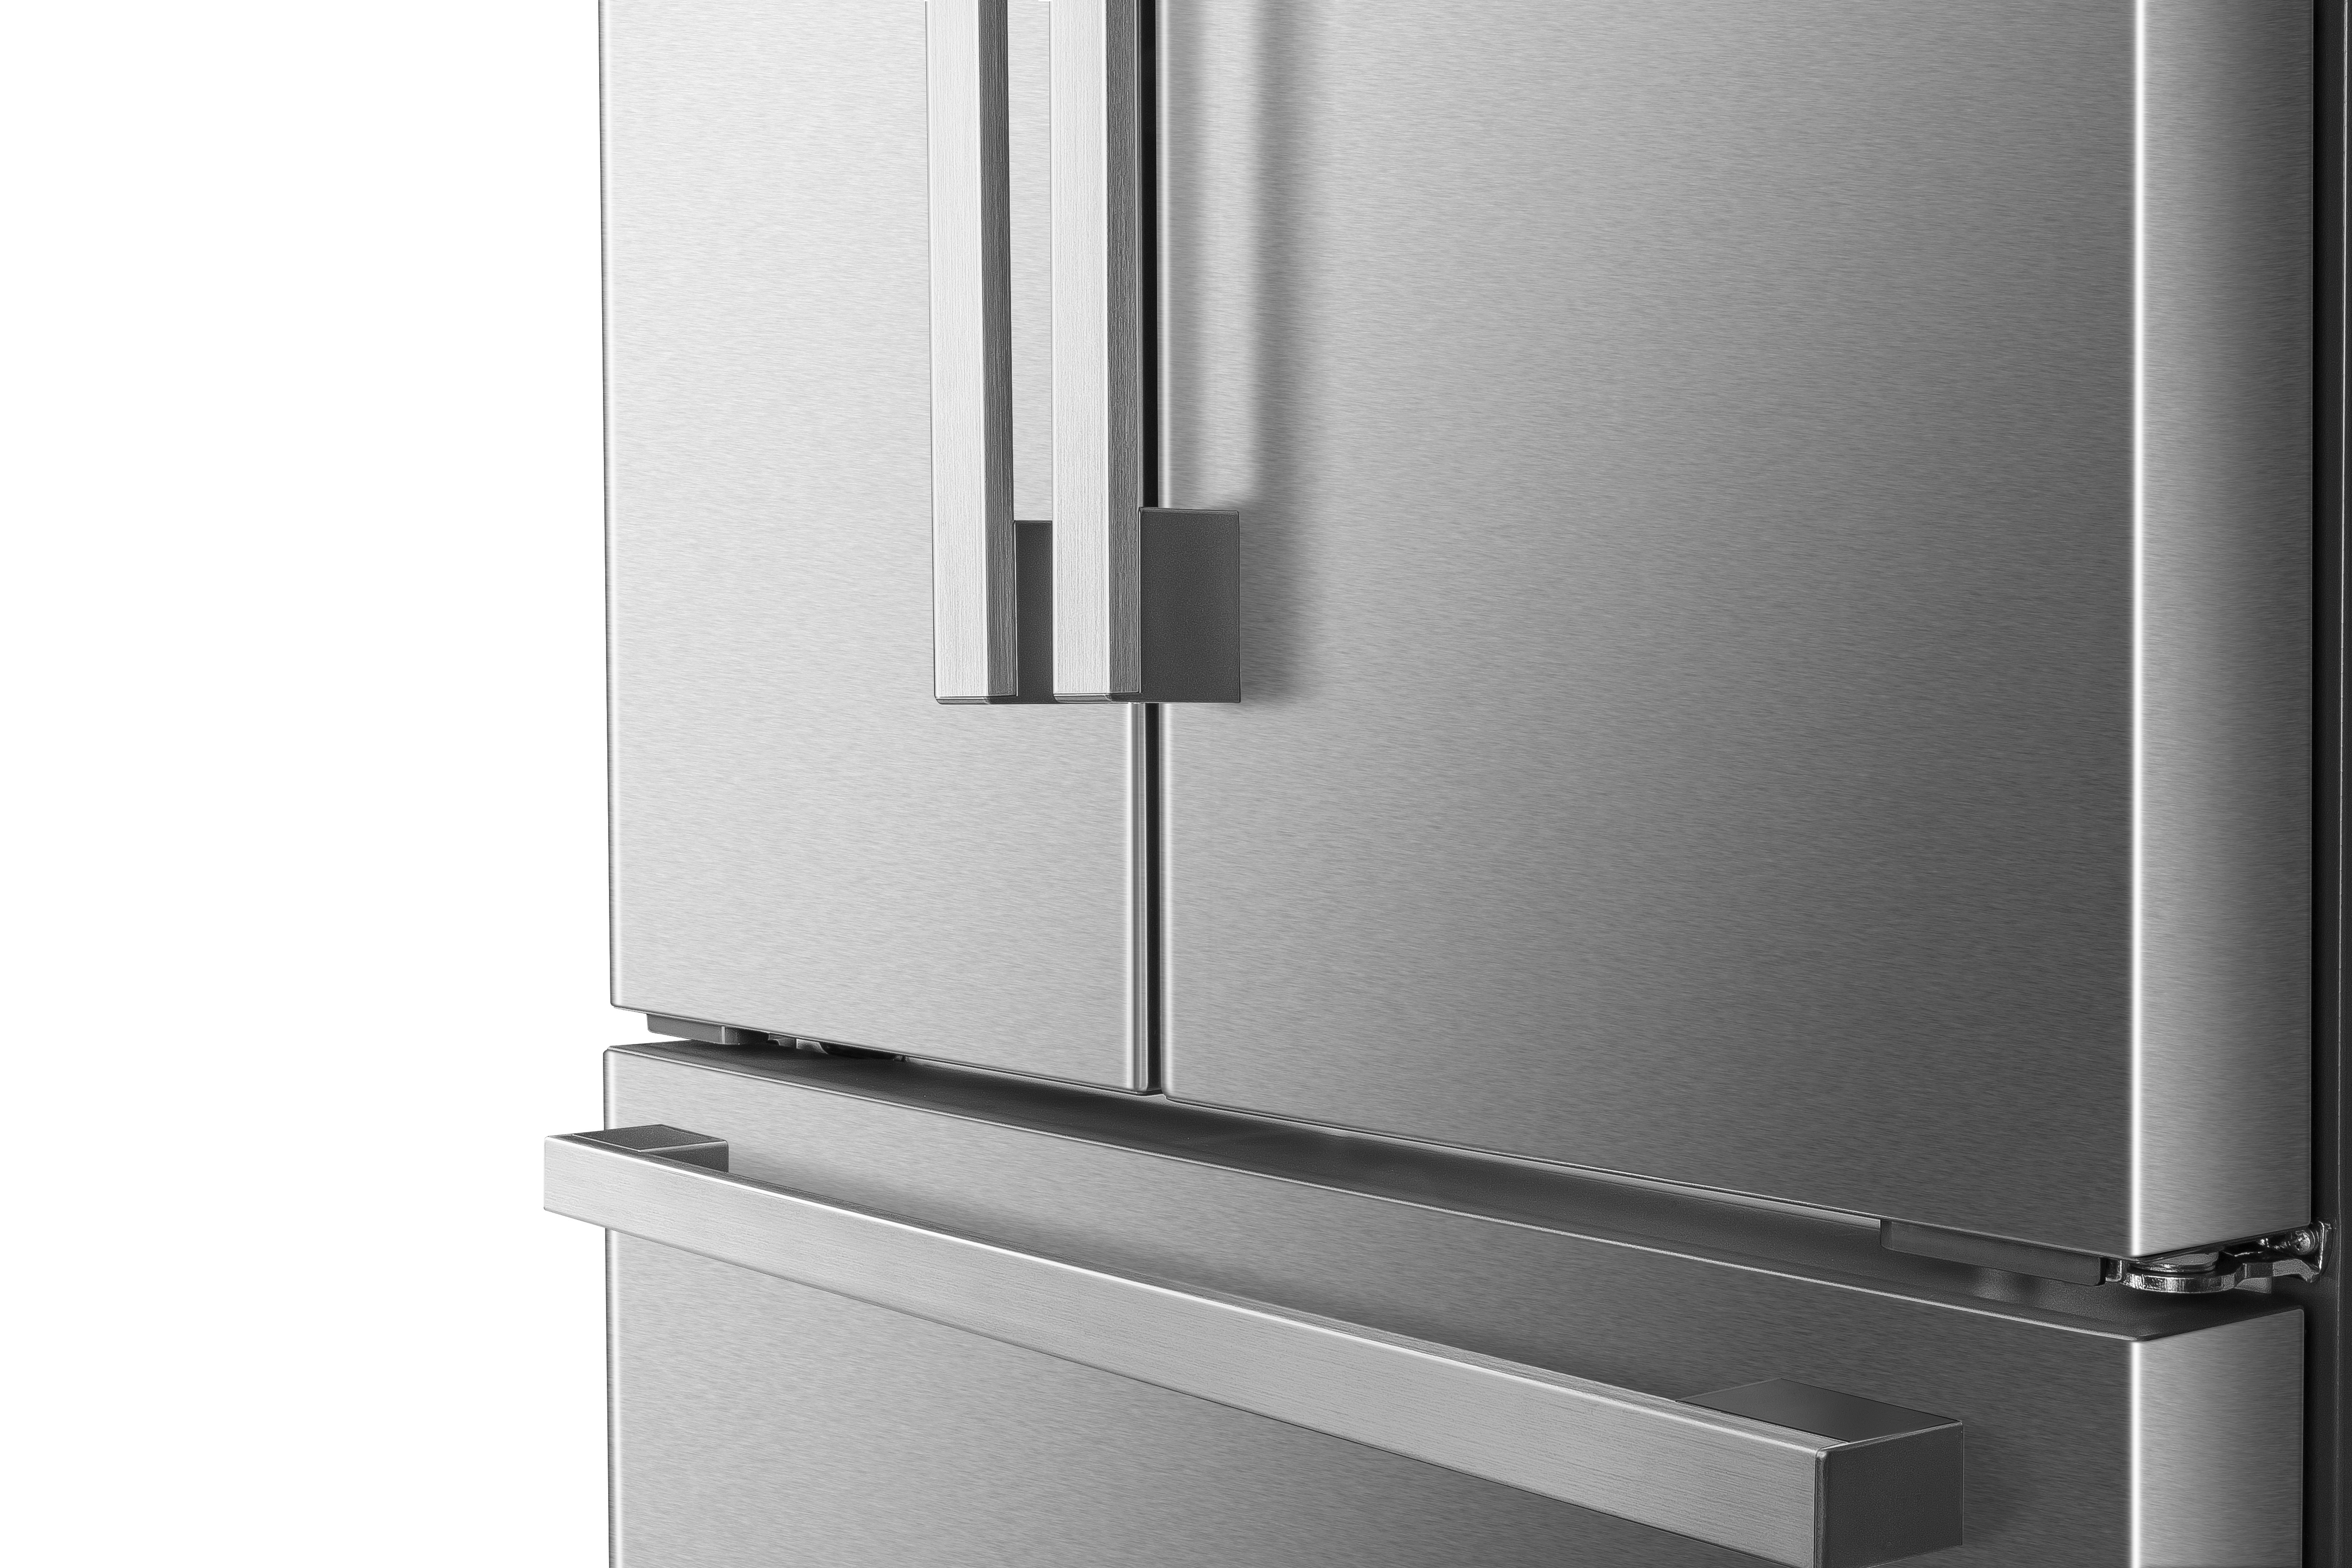 Mora 21 Cu ft French Door Refrigerator Silver Model MRF206N6BSE - image 4 of 24